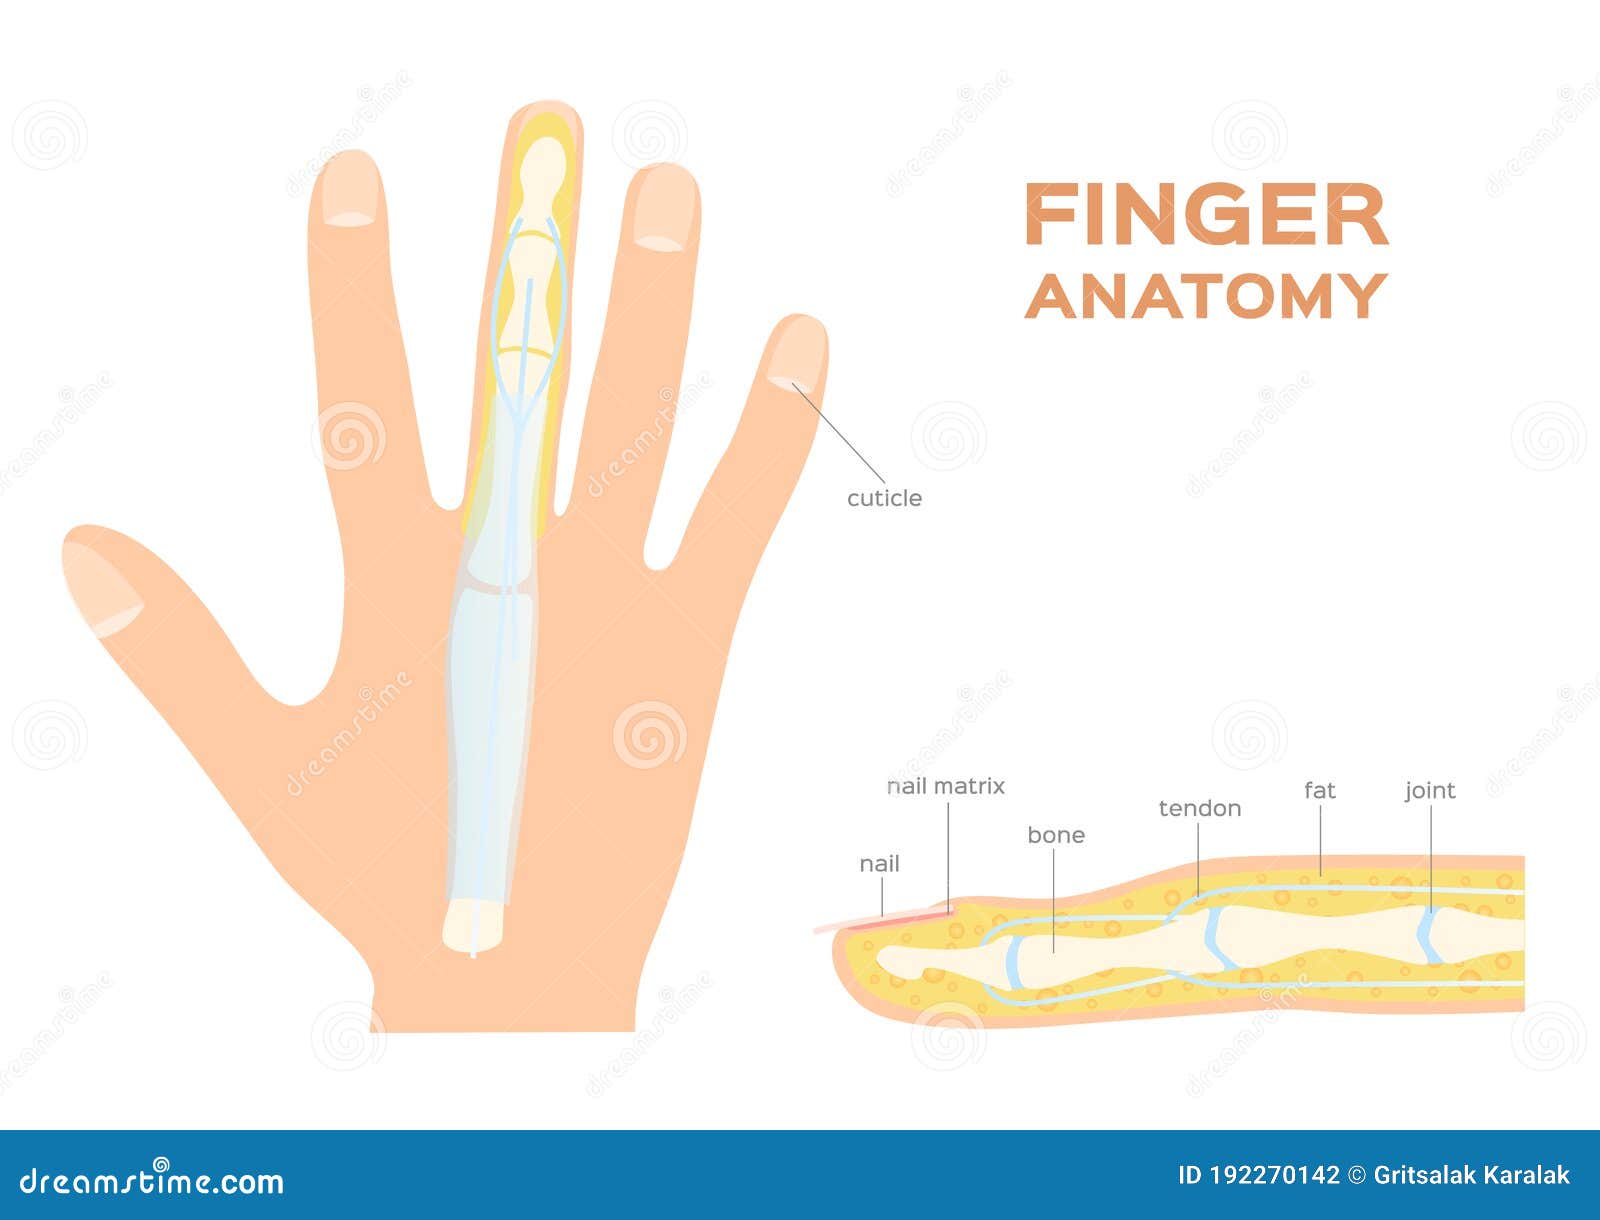 structure of a nail. human nail . finger anatomy